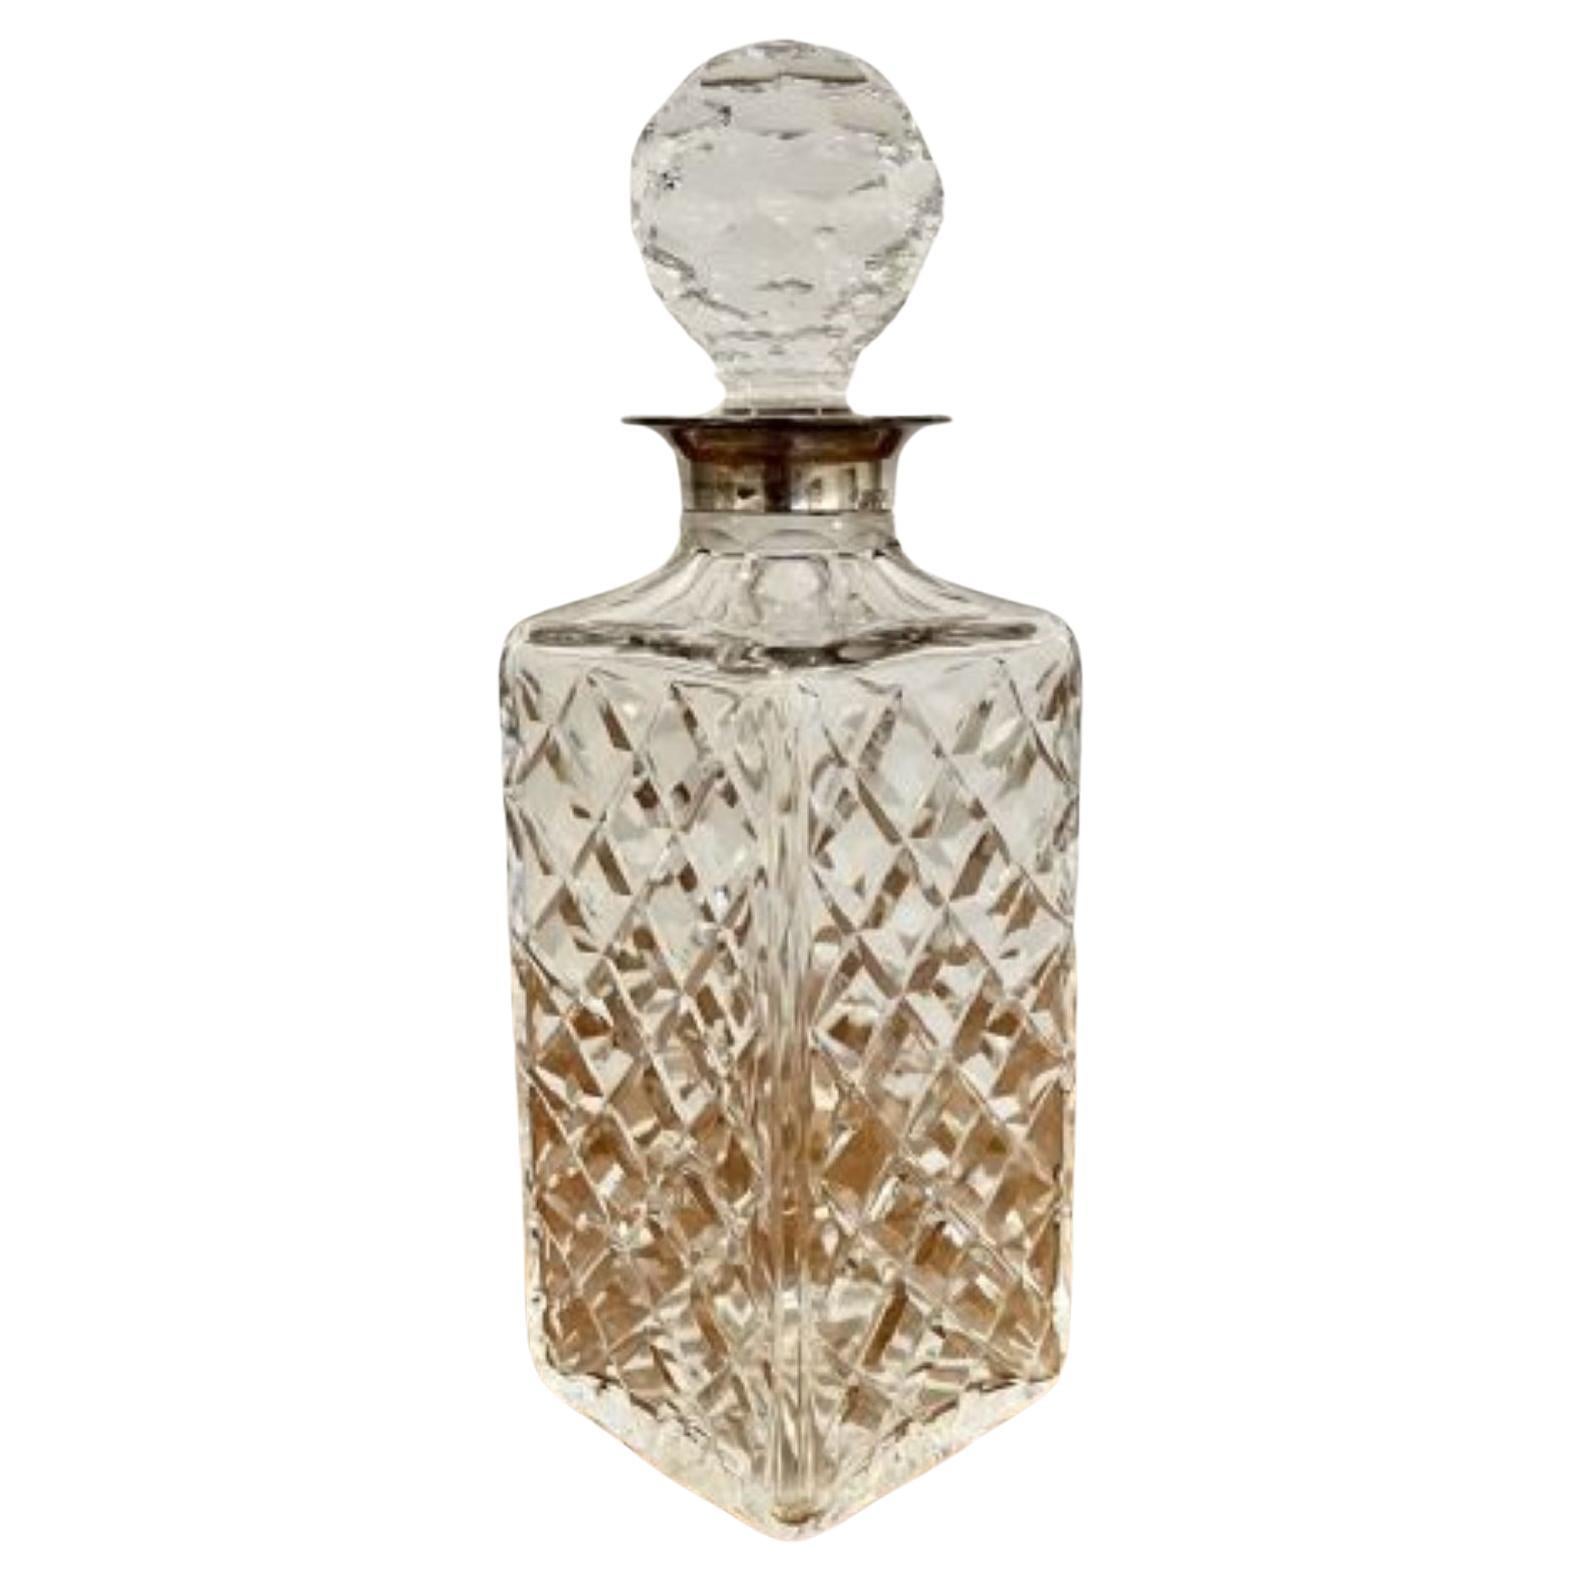 Antique Edwardian quality cut glass hallmarked silver collar decanter